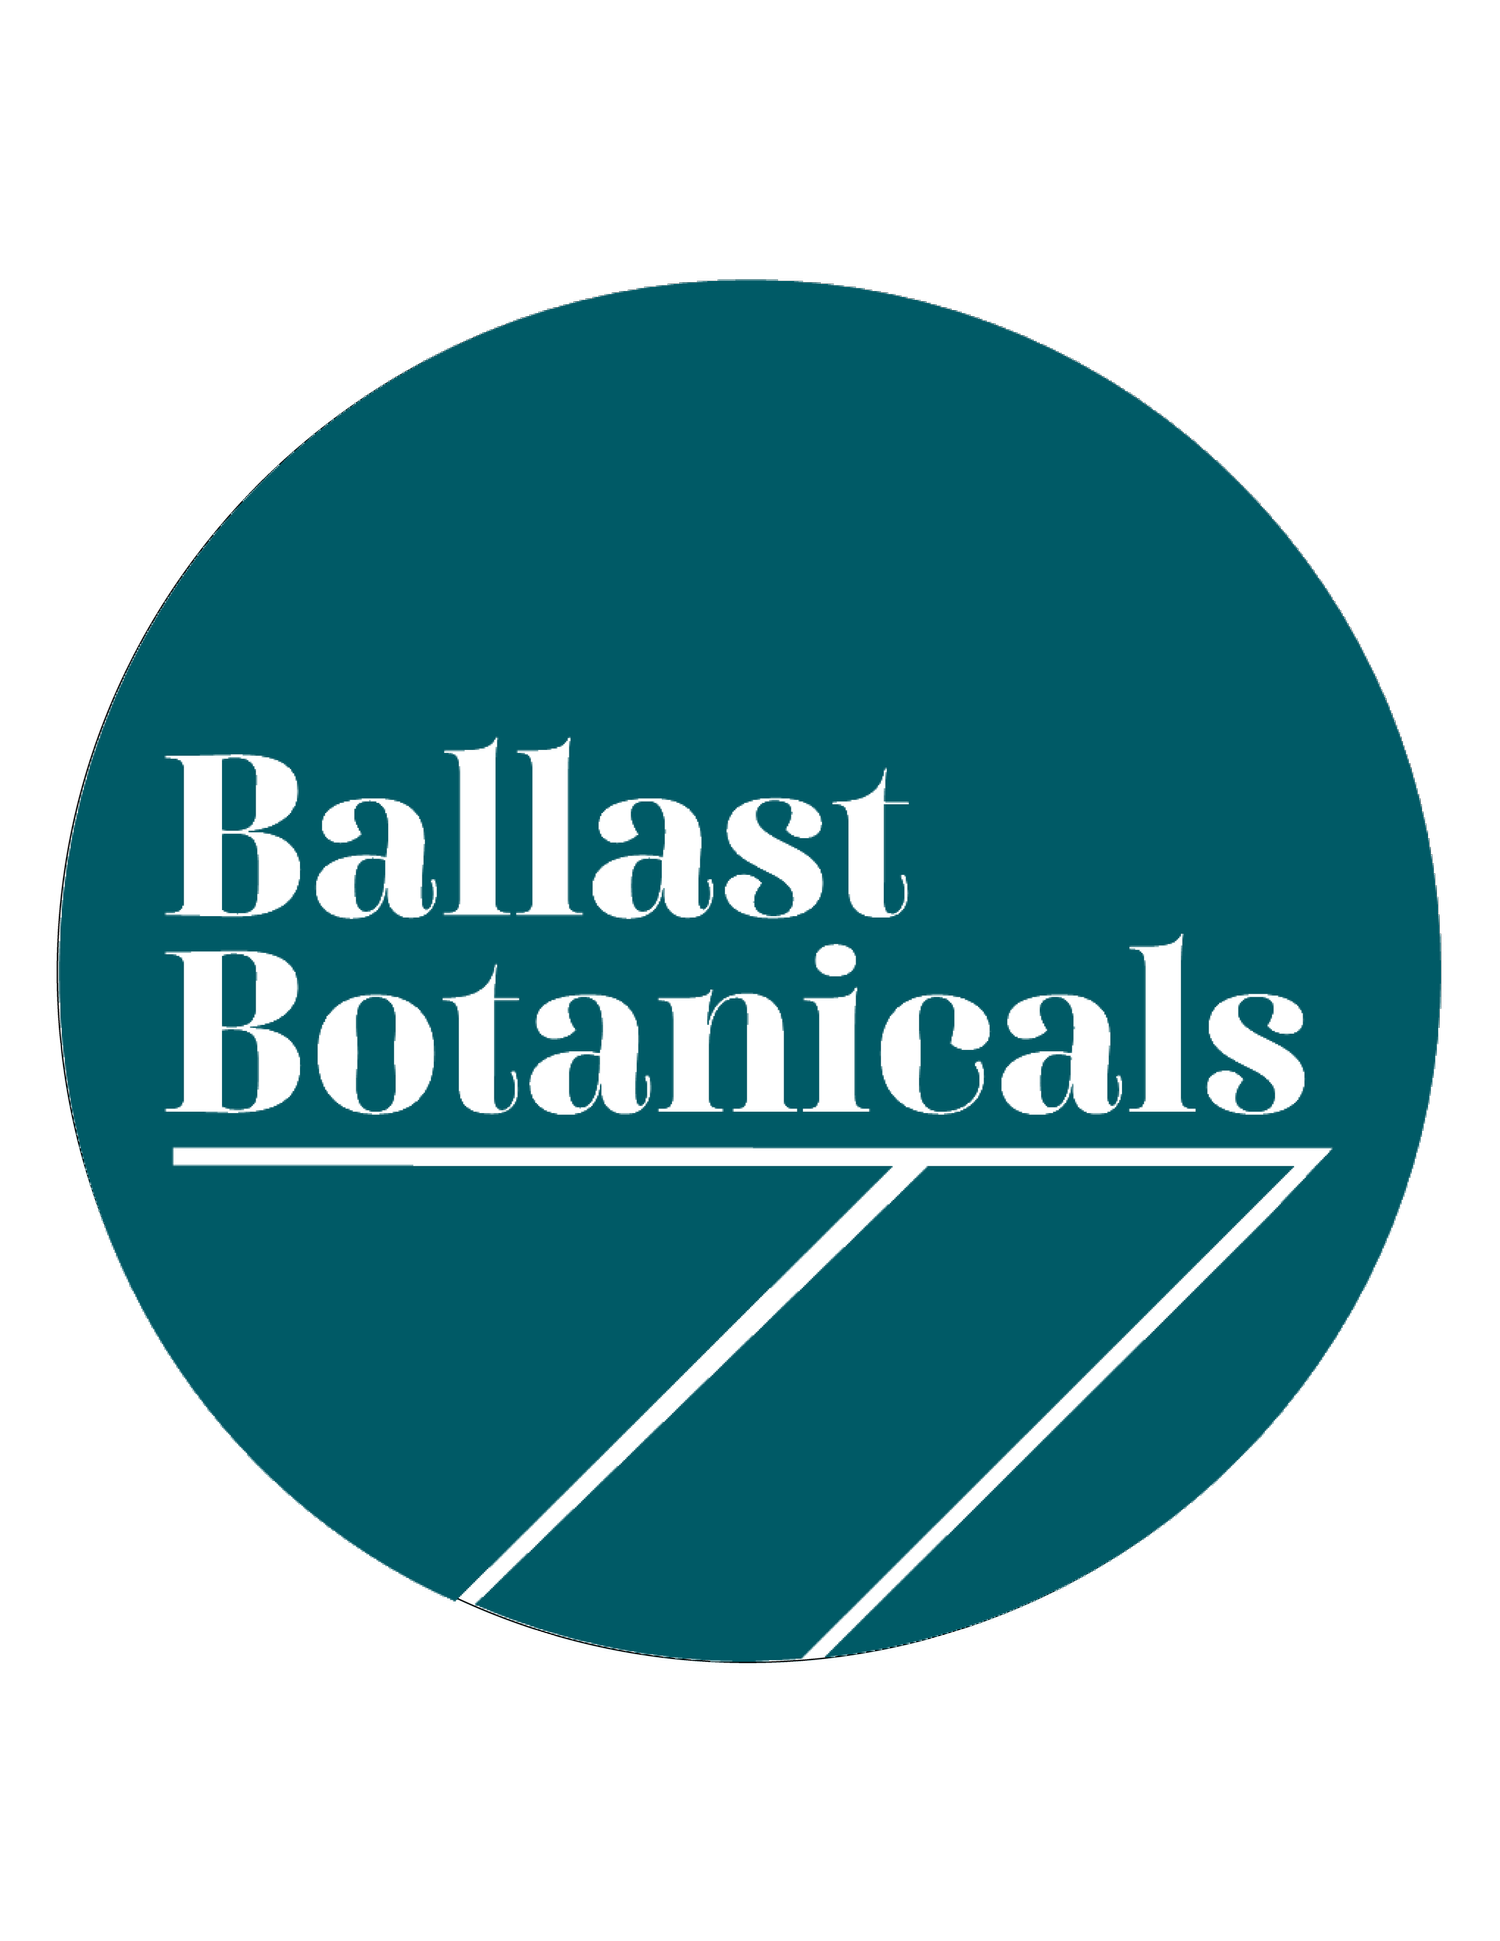 Ballast Botanicals and Acupuncture